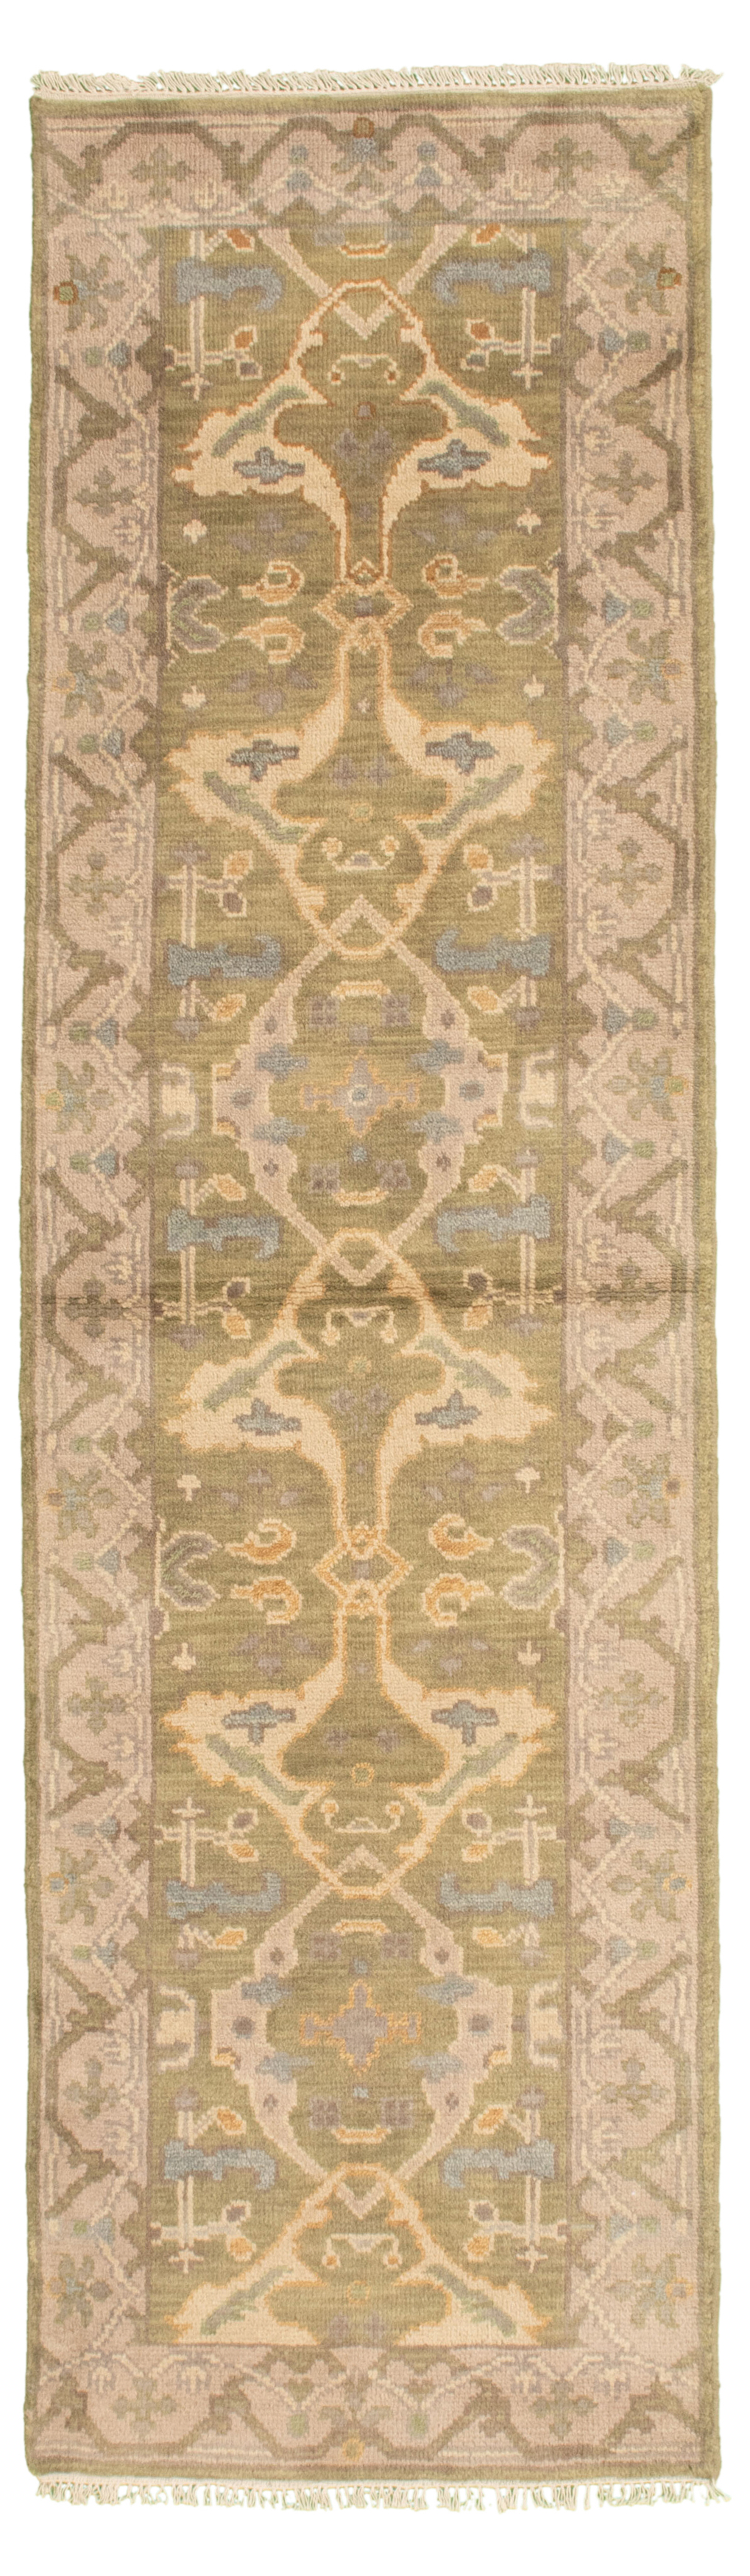 Hand-knotted Royal Ushak Olive Wool Rug 2'6" x 8'6" Size: 2'6" x 8'6"  